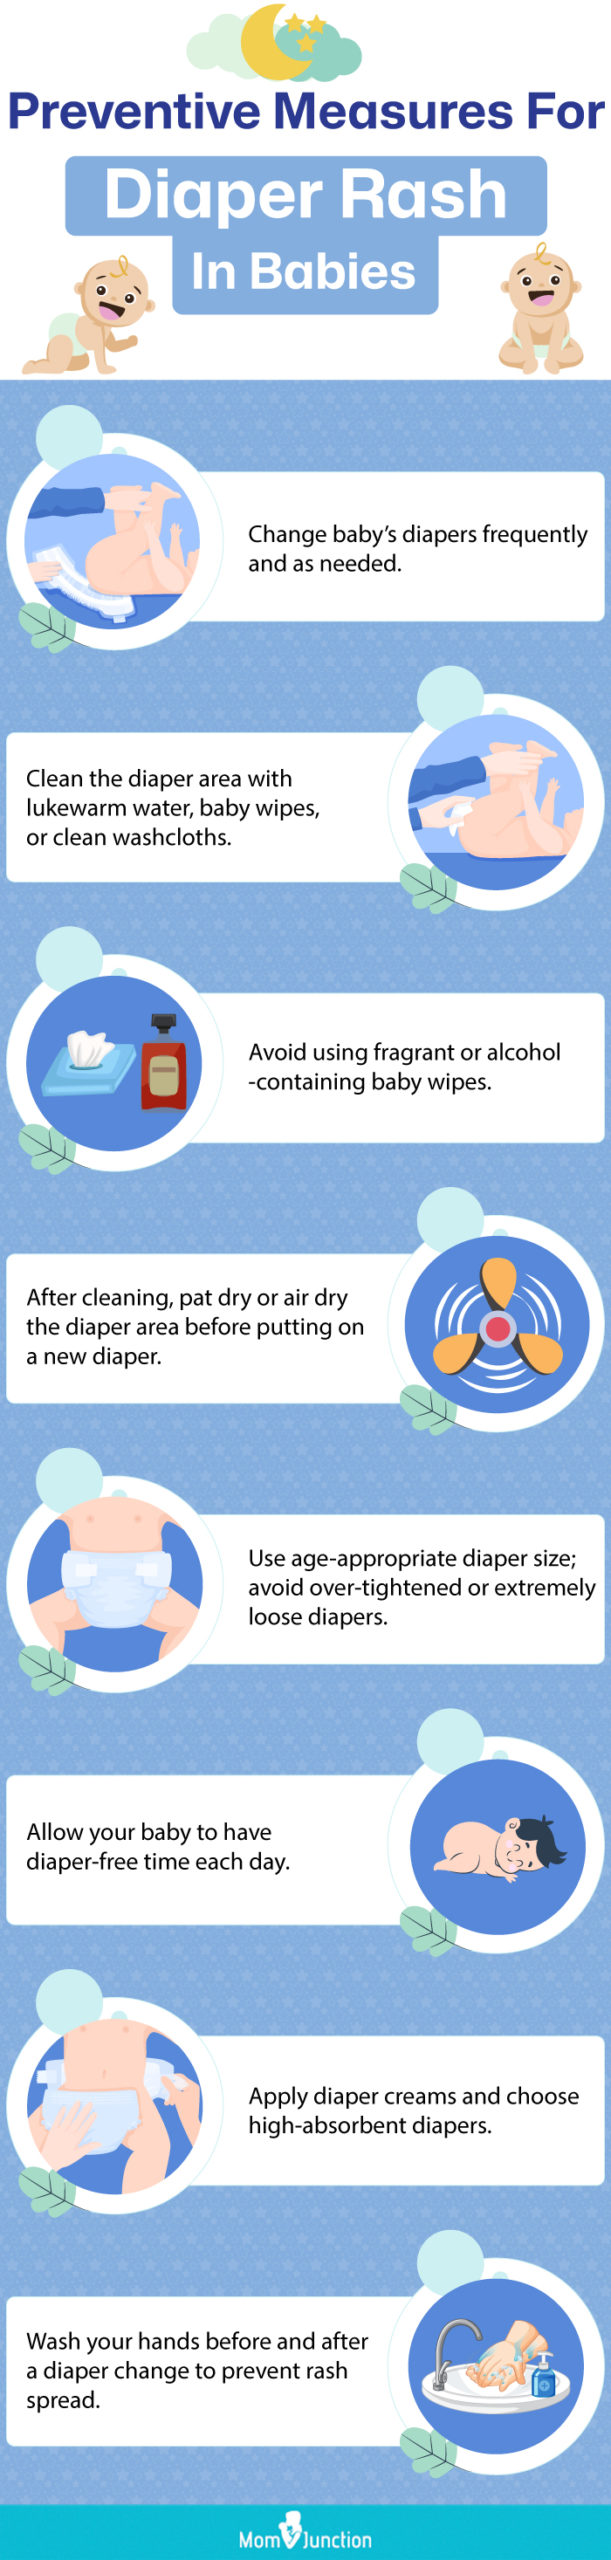 4 Common Diaper Rash Types: Causes & Treatments